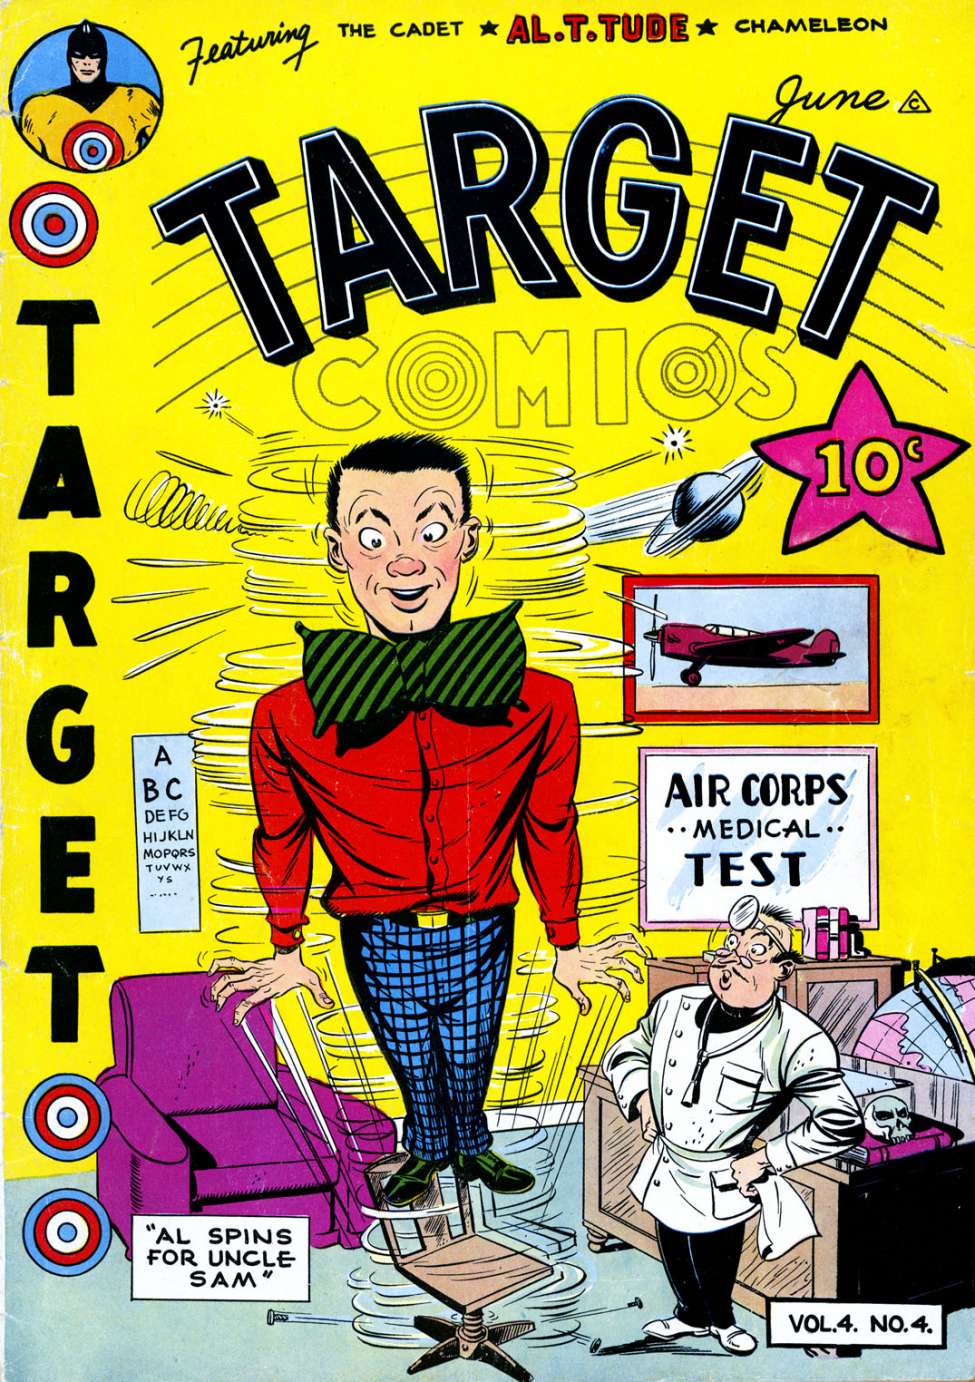 Comic Book Cover For Target Comics v4 4 - Version 1